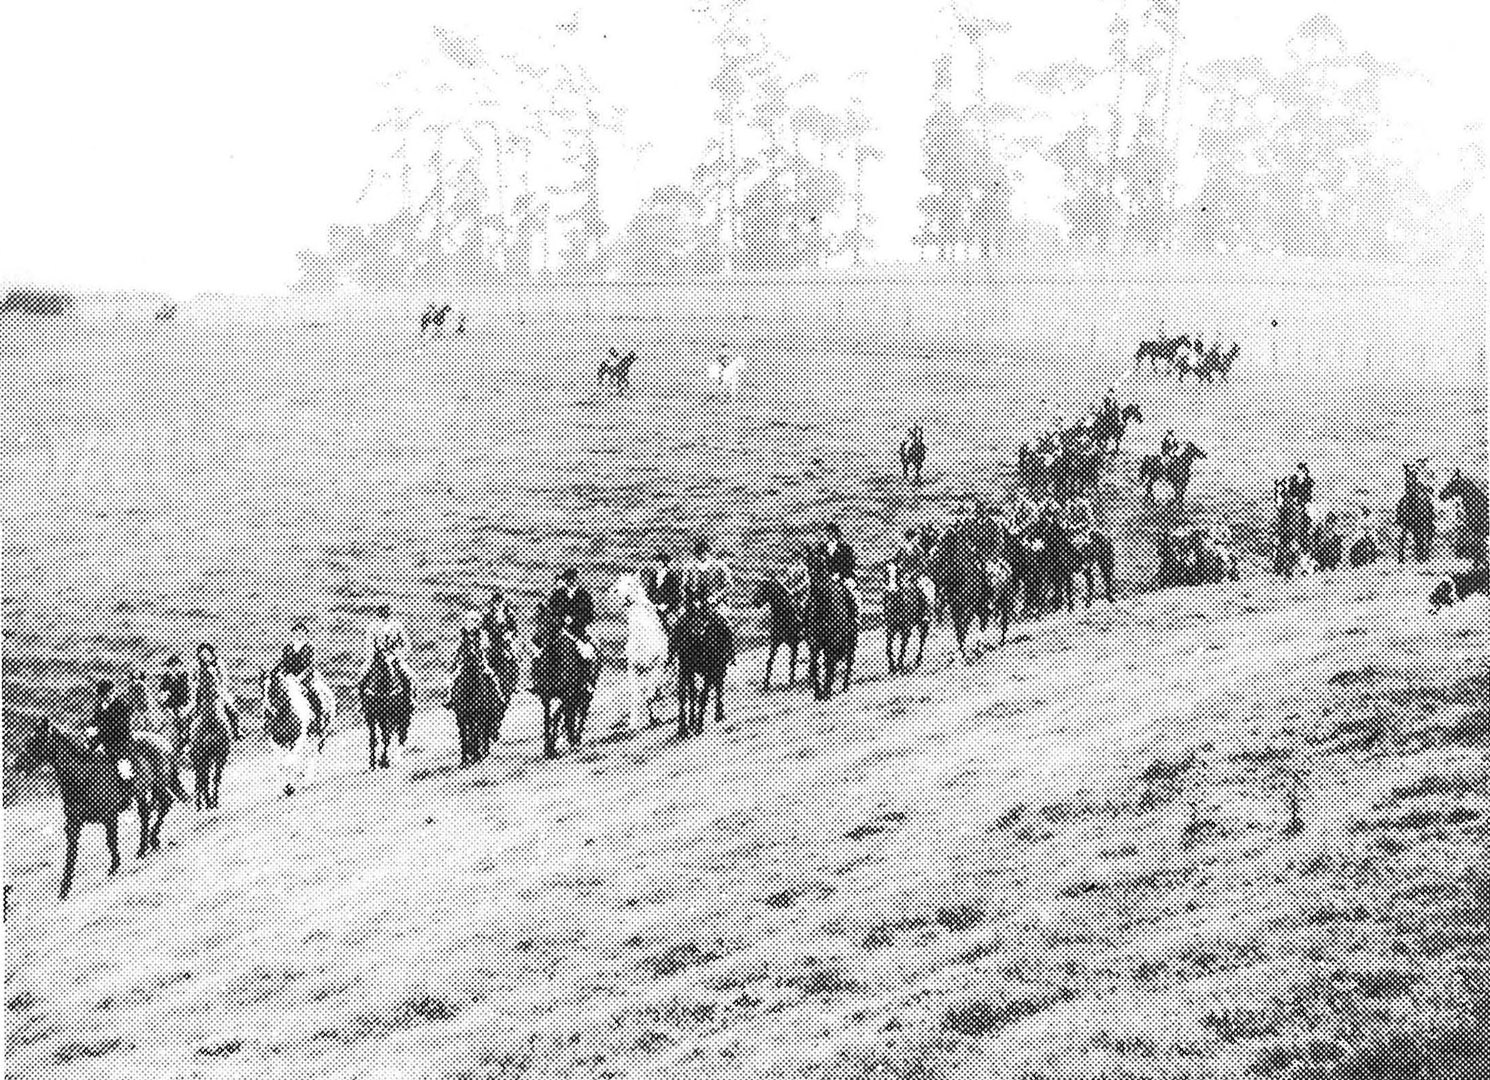 The Waikato Hunt on Johns' property (circa 1950)